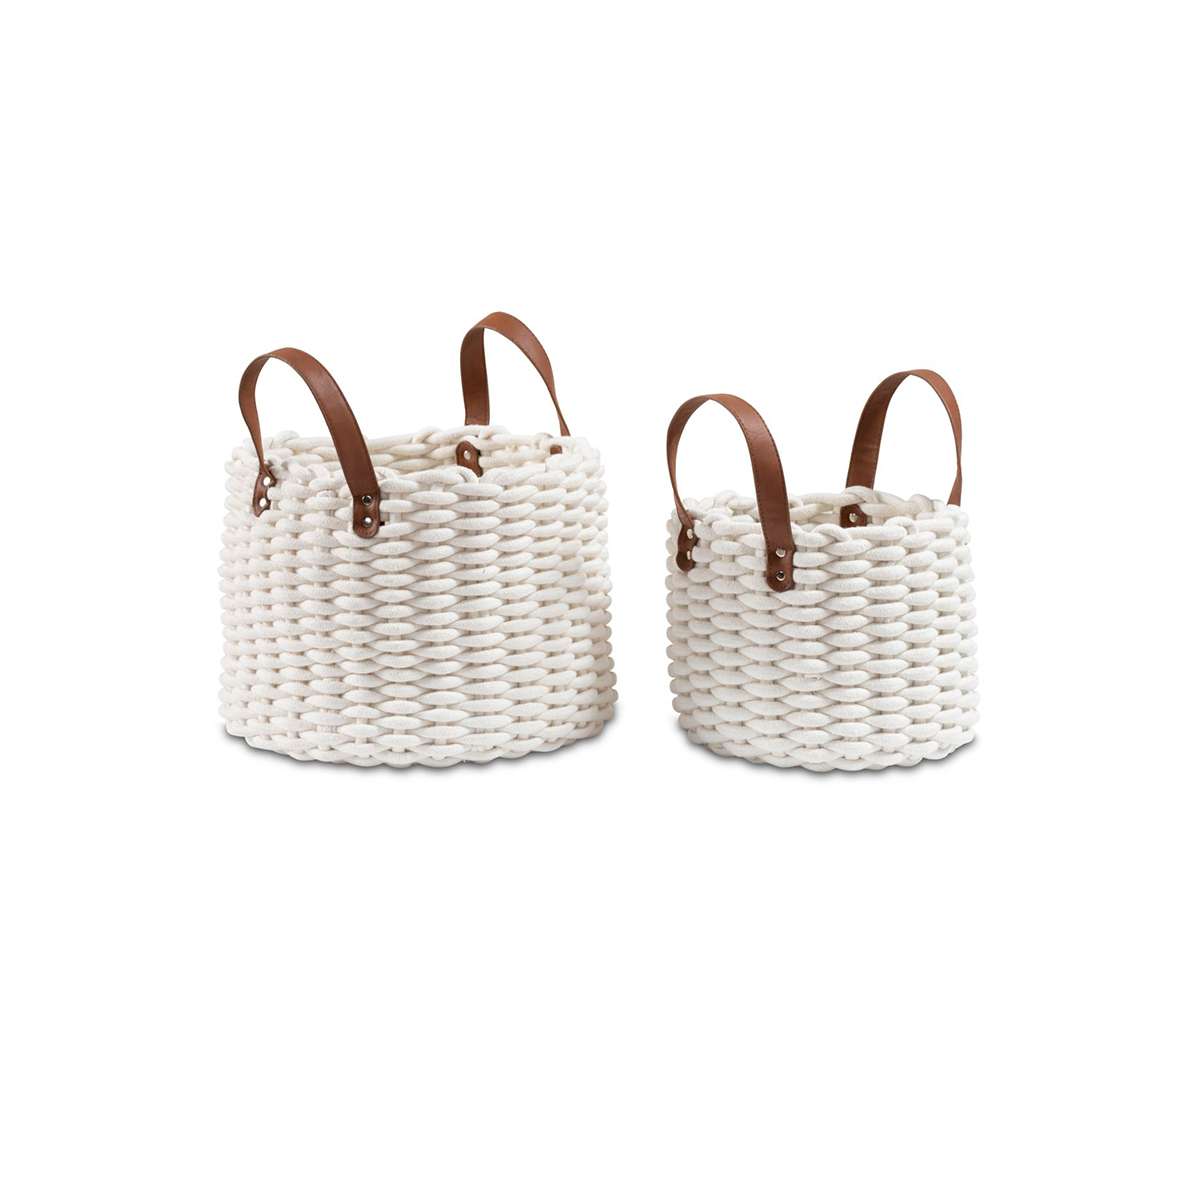 Ari Braided Basket with Handles - Set of 2 - Medium/Large - White